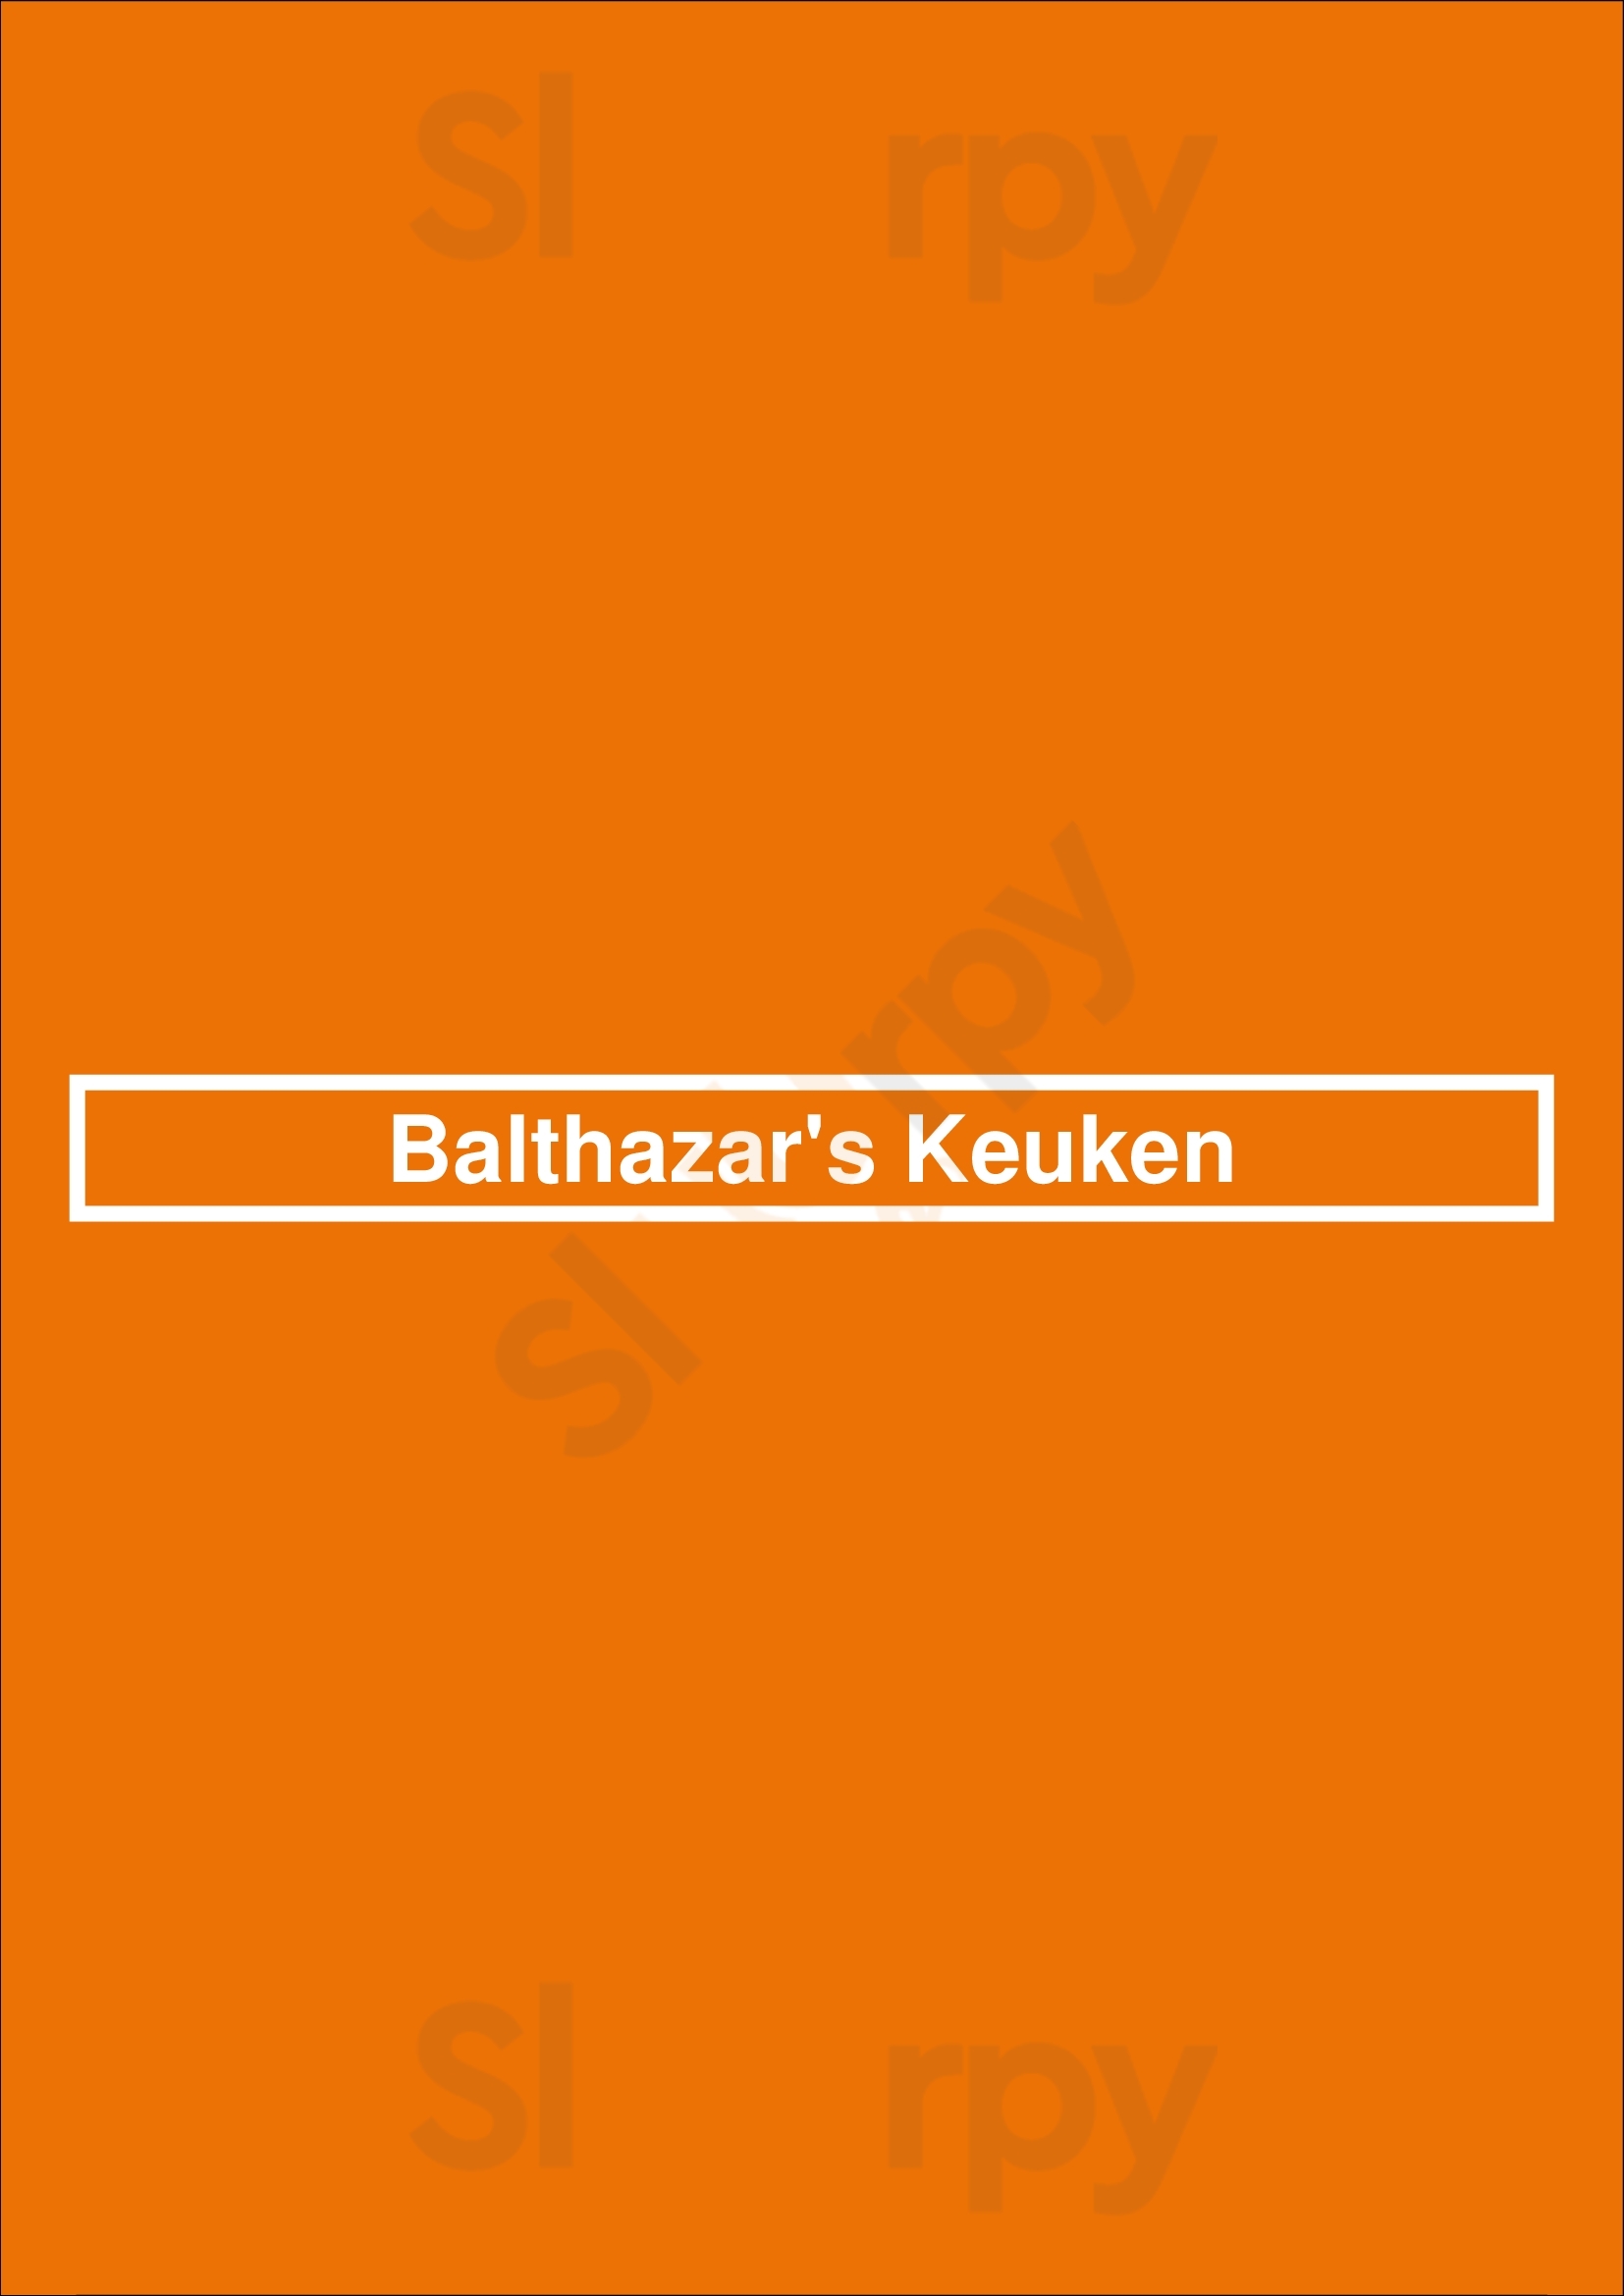 Balthazar's Keuken Amsterdam Menu - 1